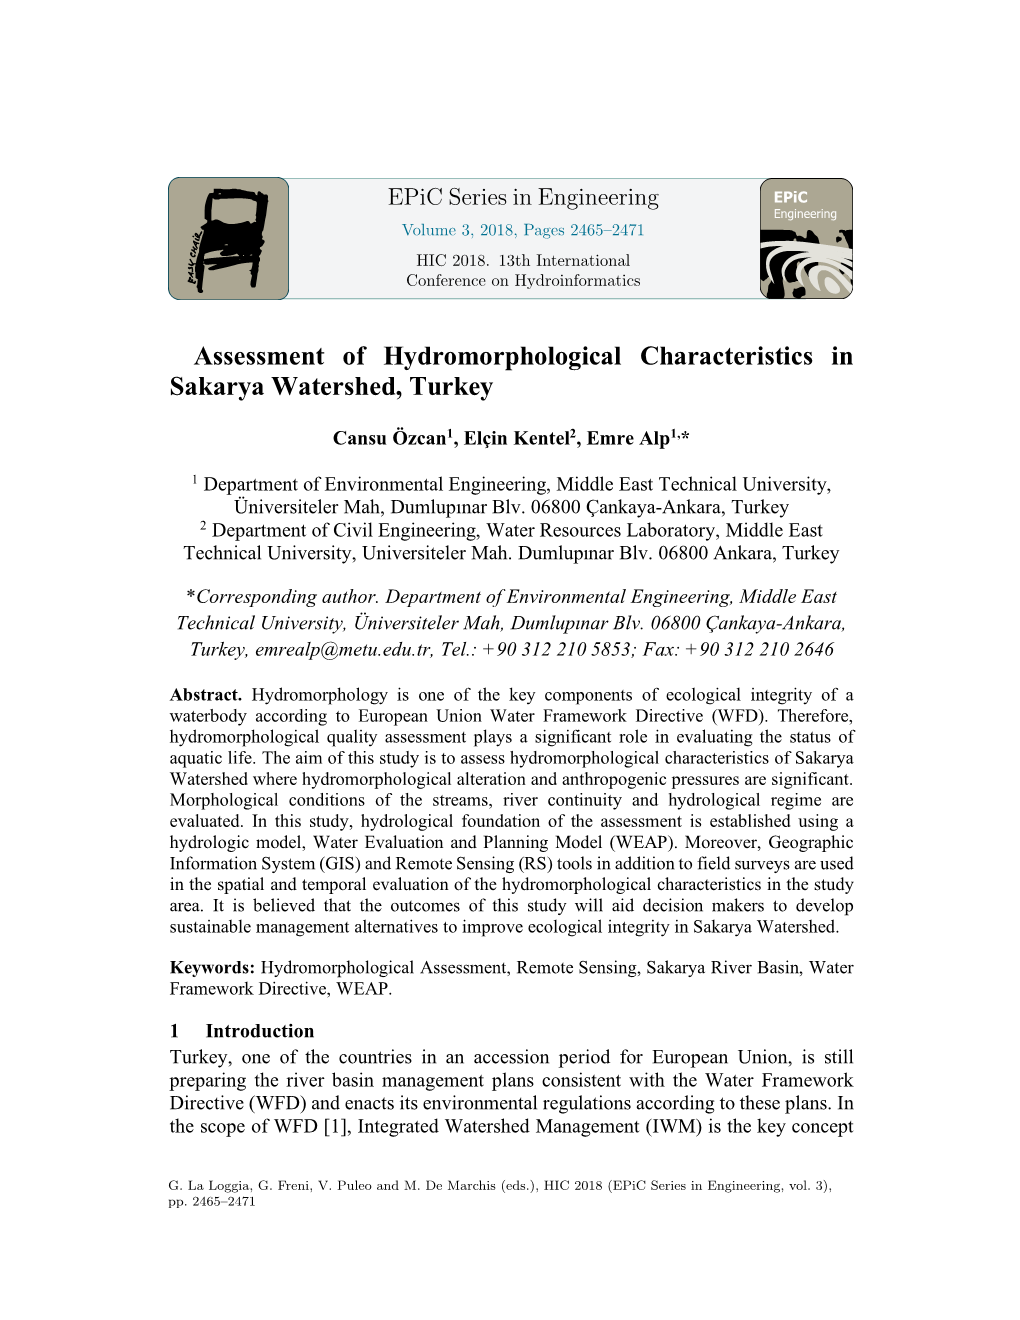 Assessment of Hydromorphological Characteristics in Sakarya Watershed, Turkey